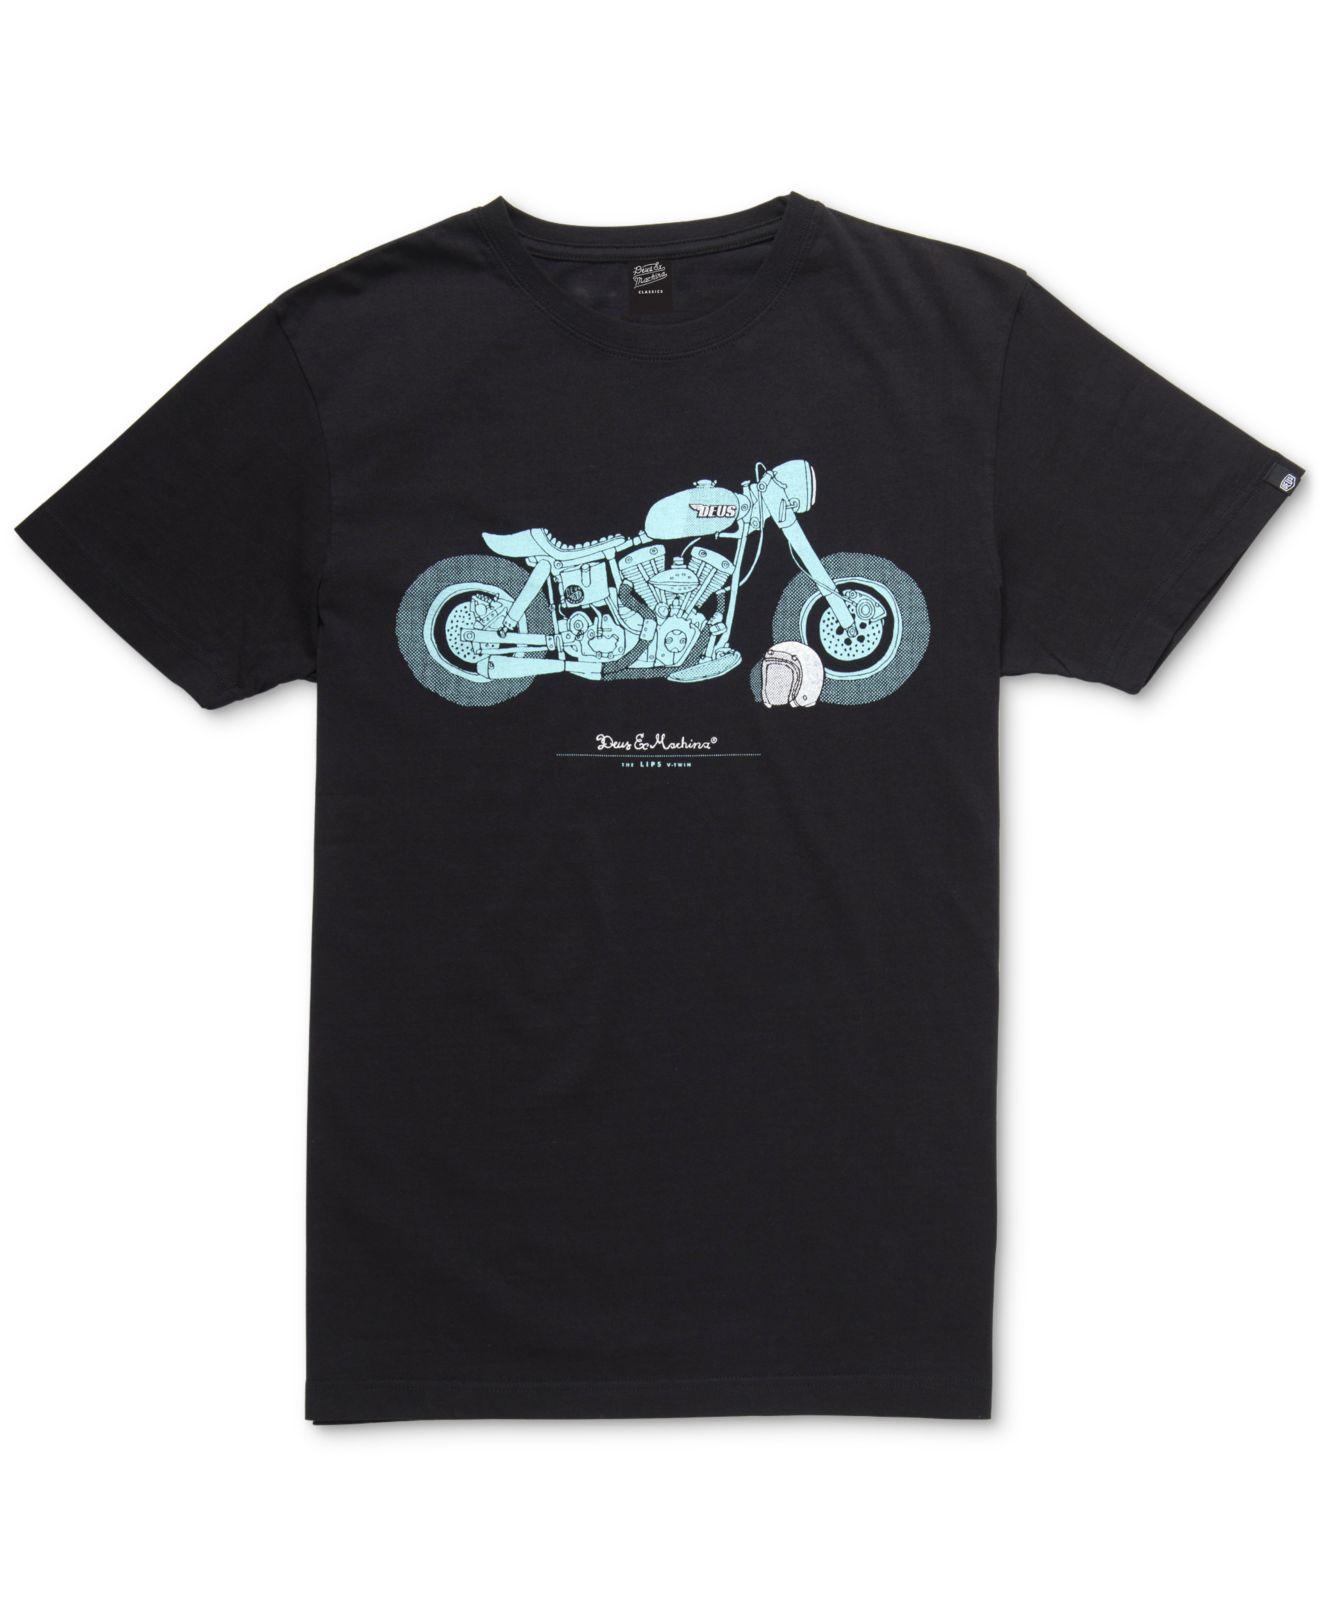 Lyst - Deus Ex Machina Motorcycle Graphic T-shirt in Black for Men